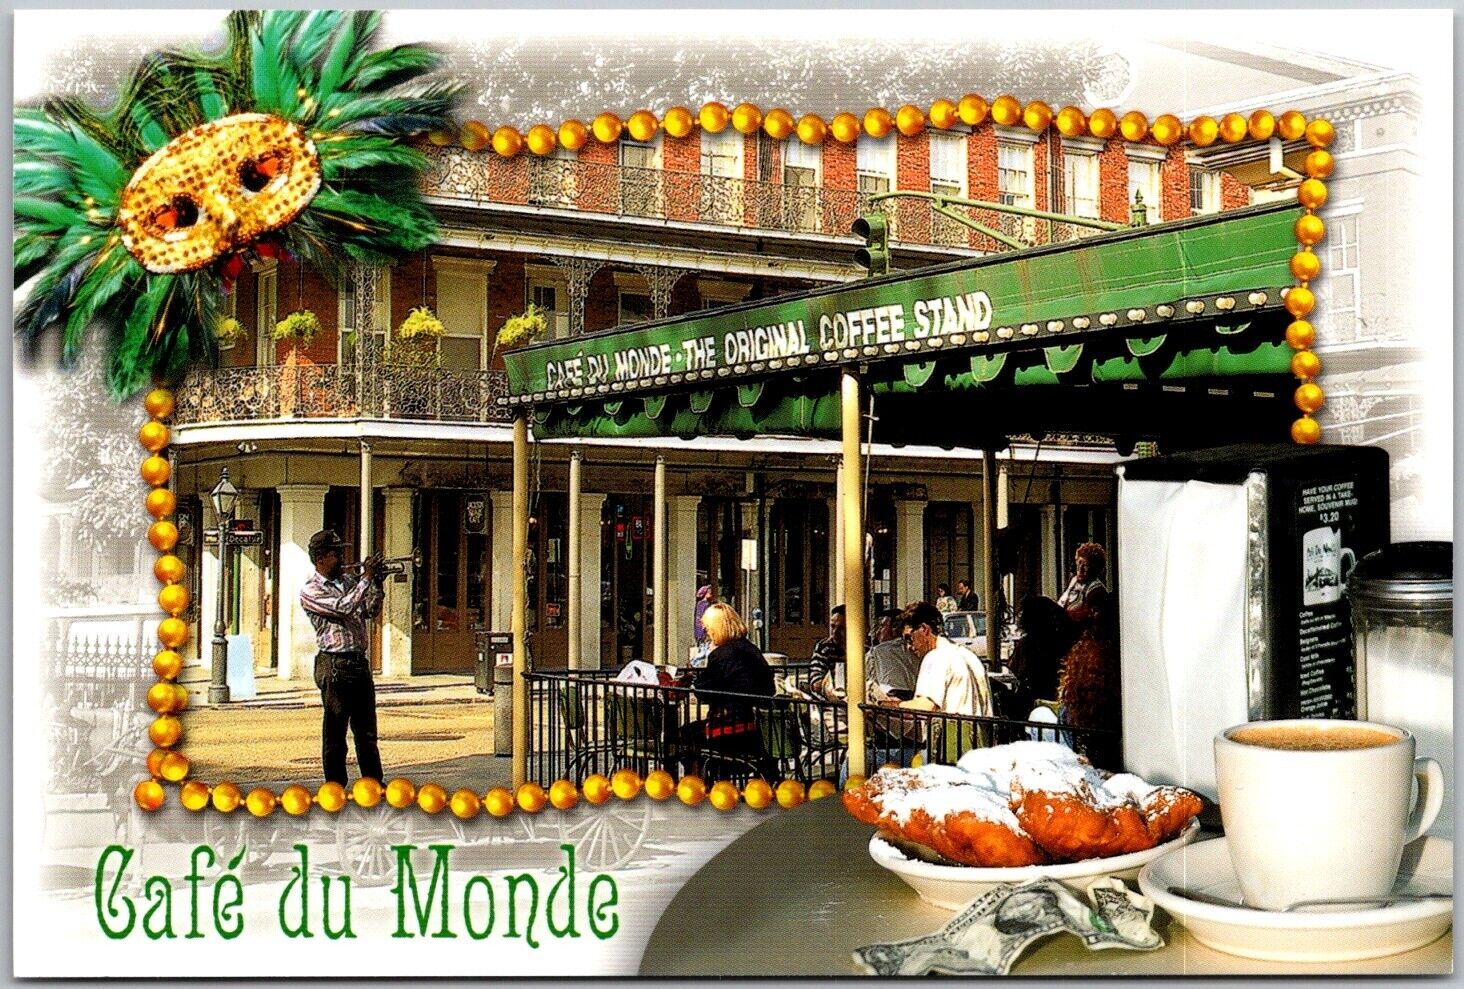 Postcard: Café du Monde - Original Coffee Stand, Rich Creole Coffee & Beign A166